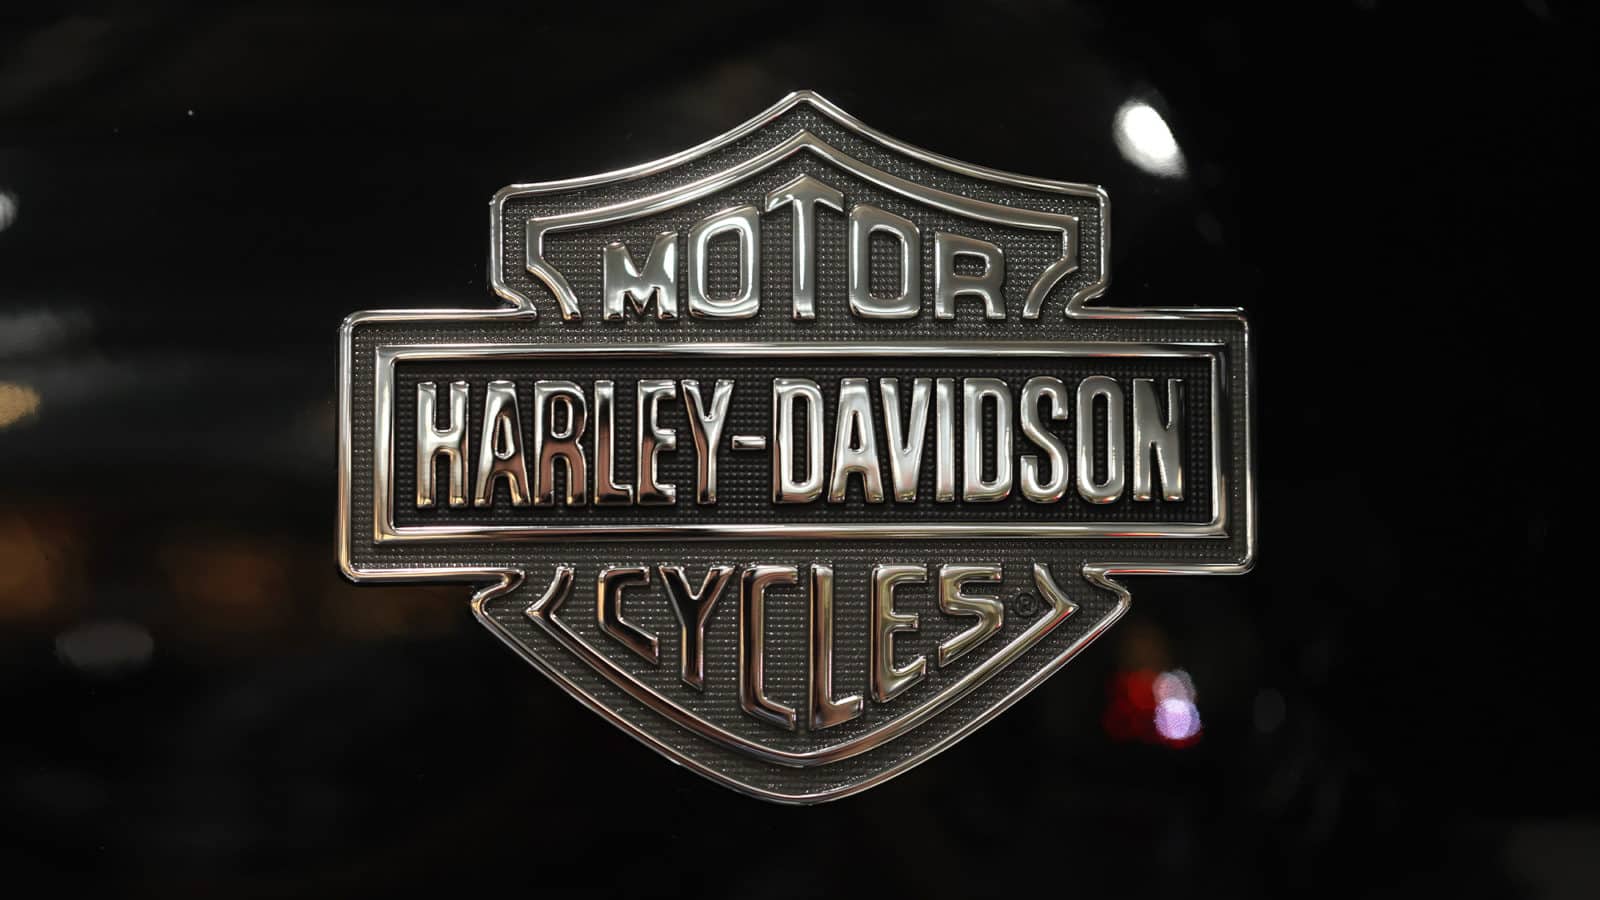 Harley Davidson badge